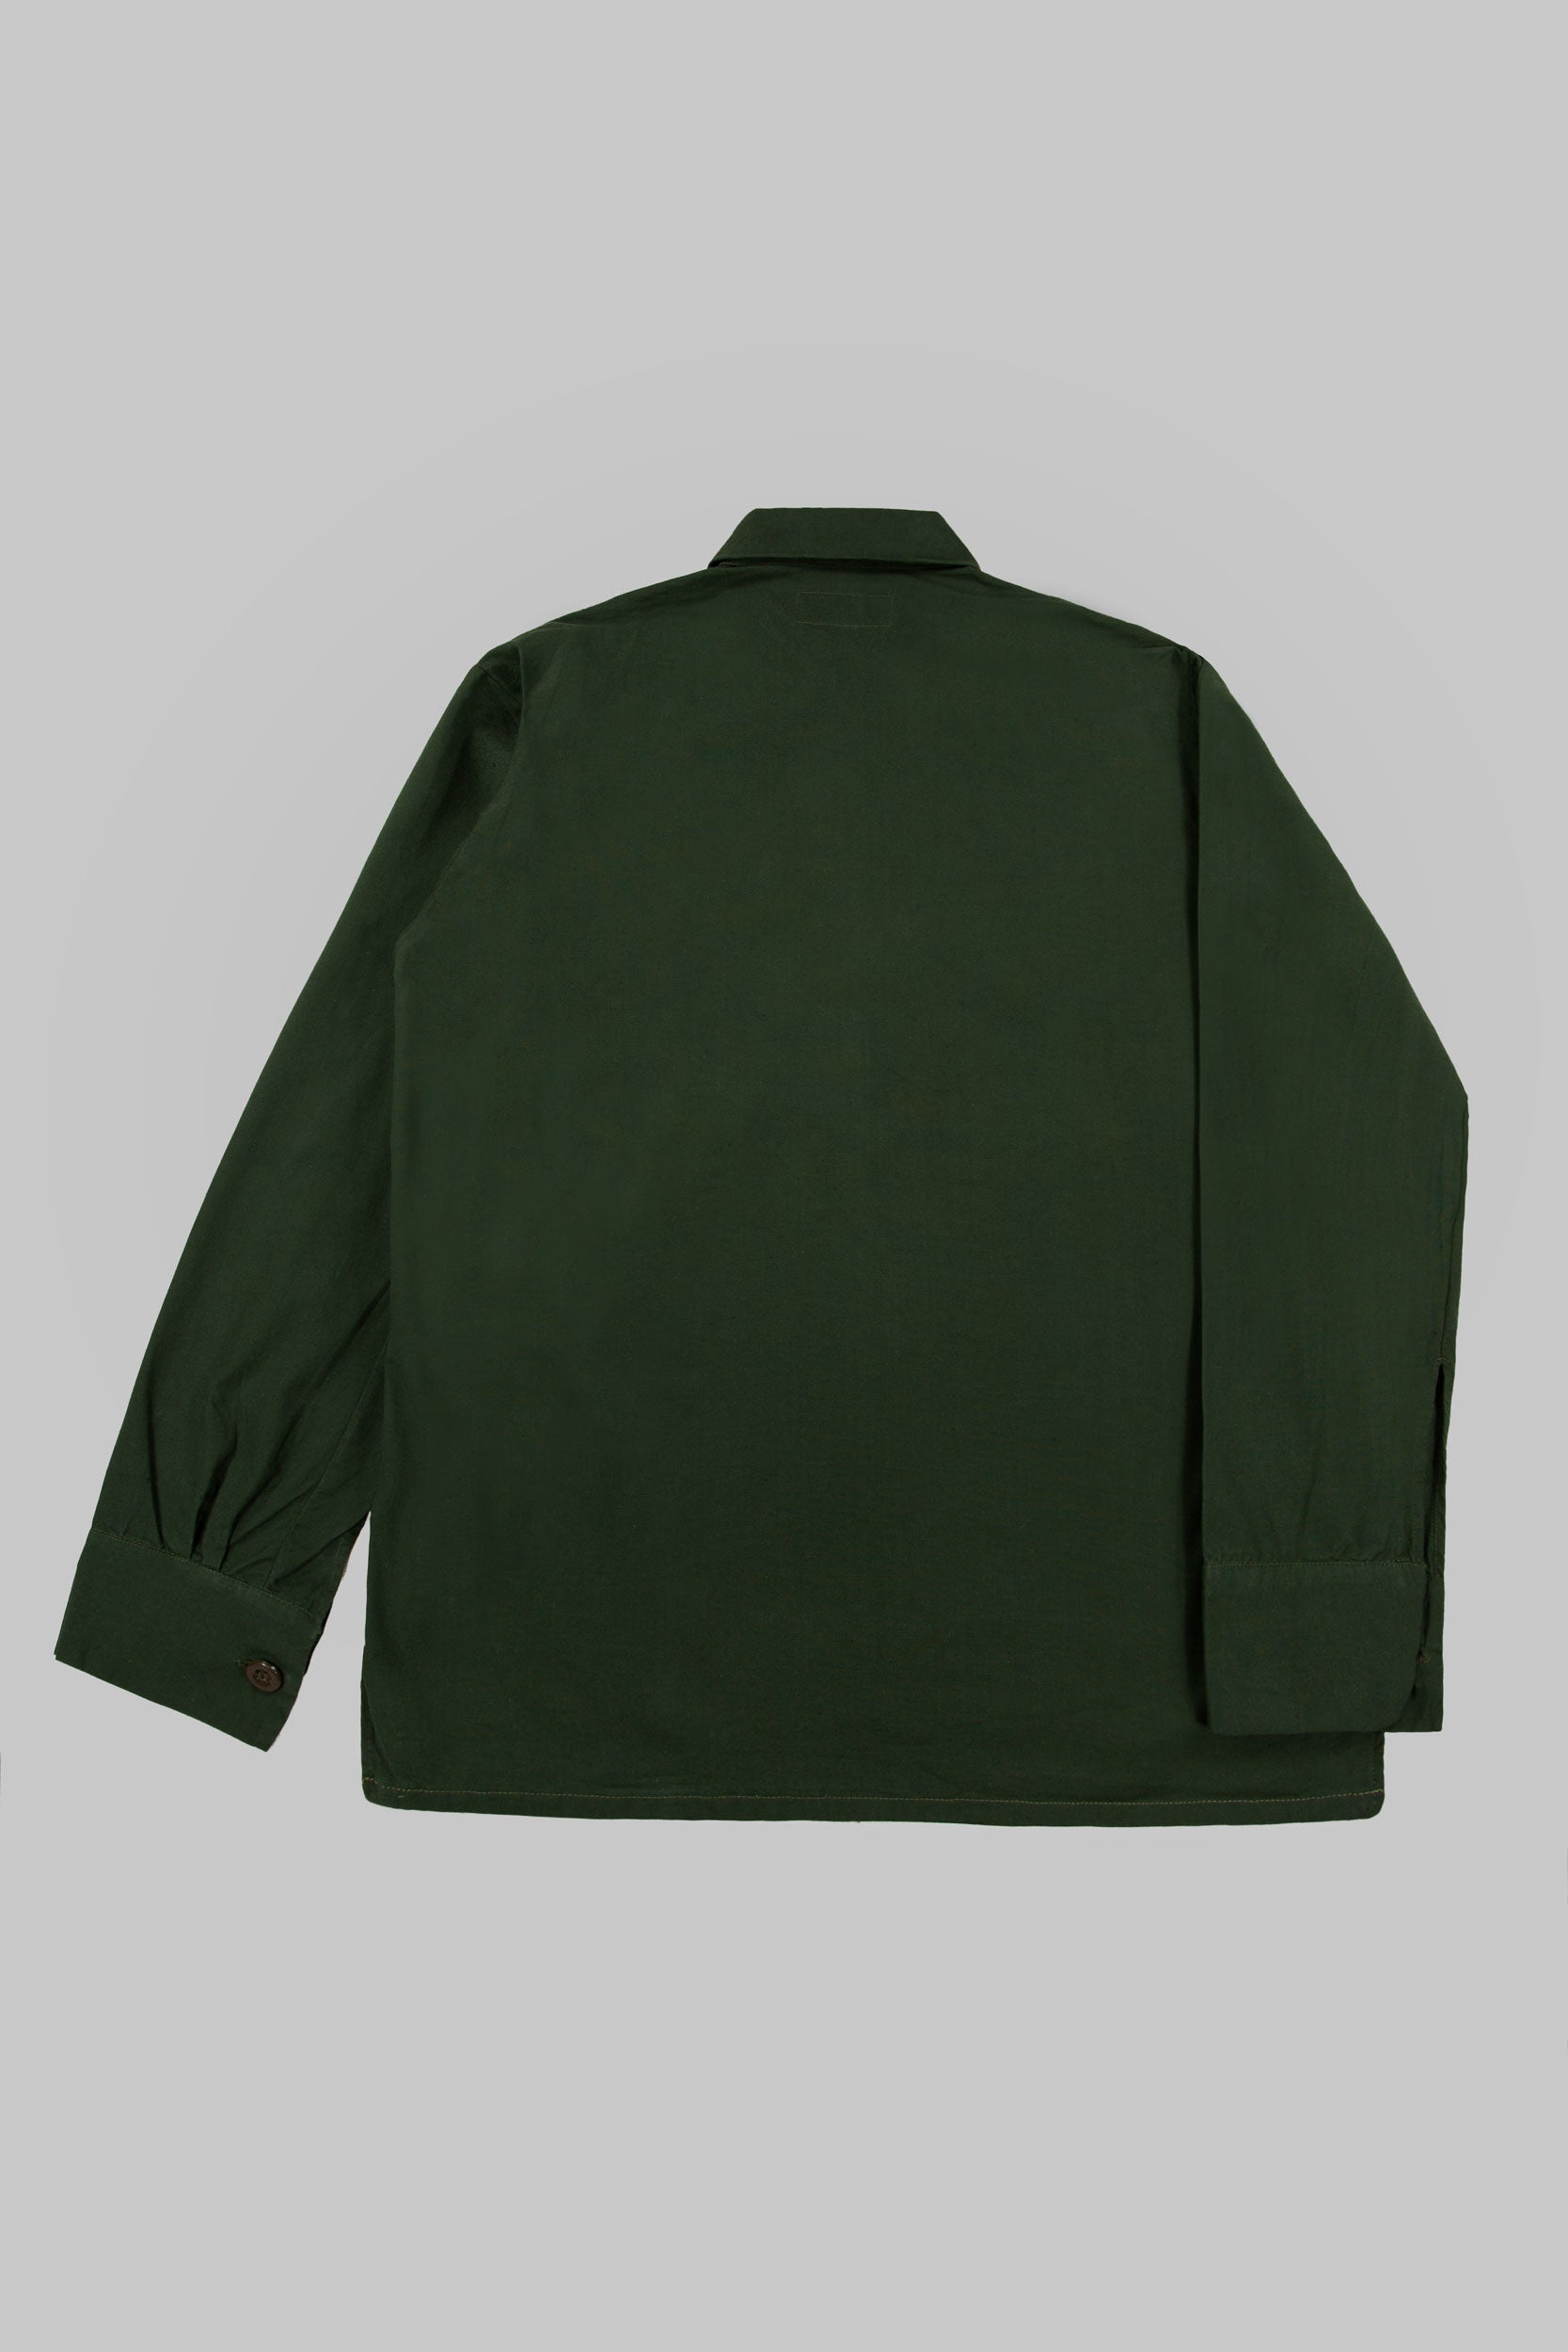 Wrights Pocket Dorma Shirt MK2 Deepest Green